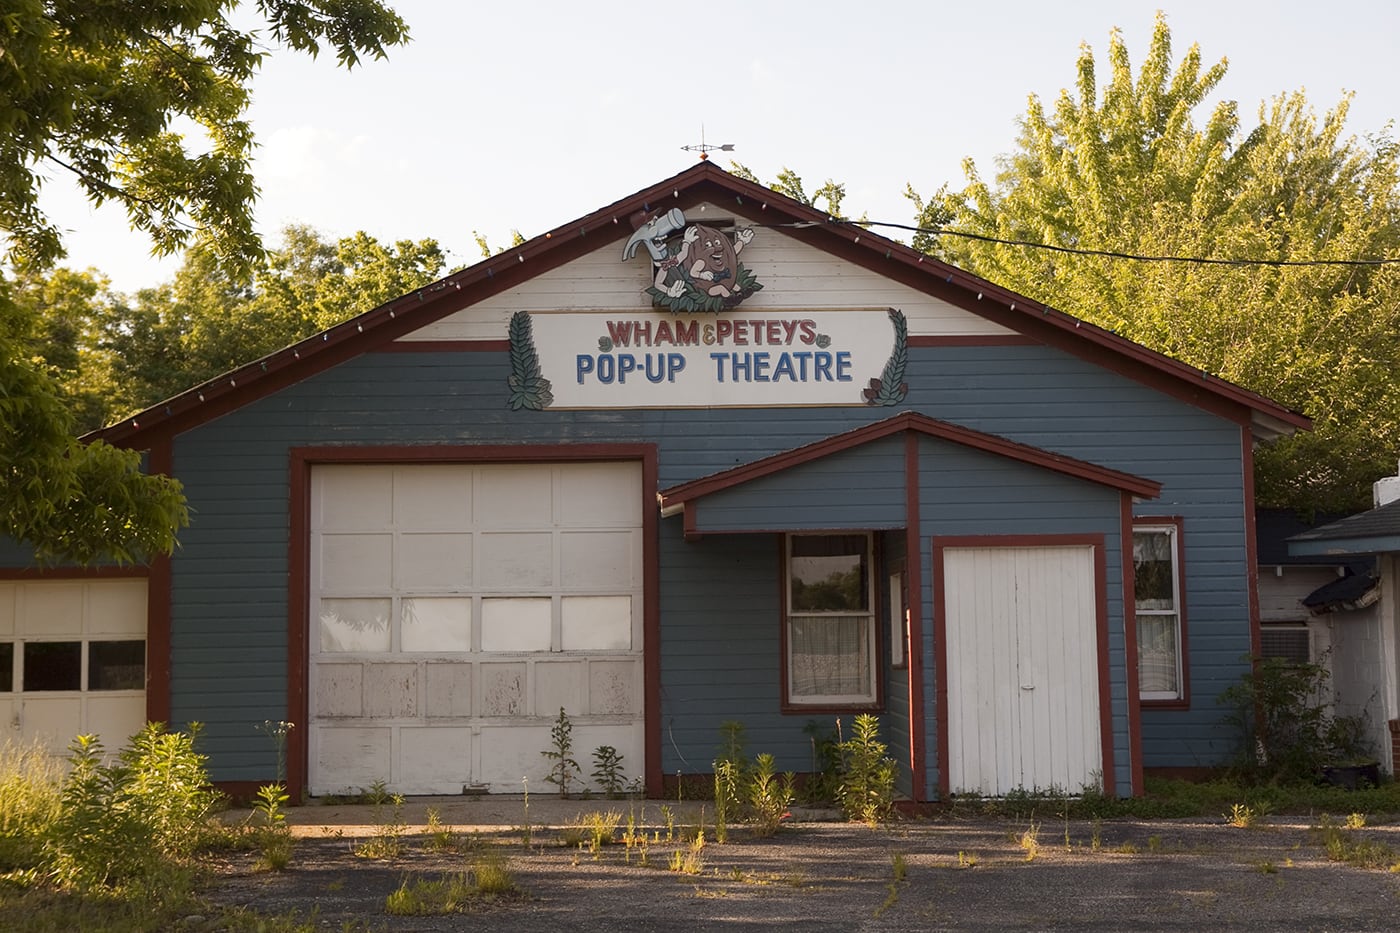 Wham & Petey's Pop-Up Theatre at the World's Largest Pecan in Brunswick, Missouri.